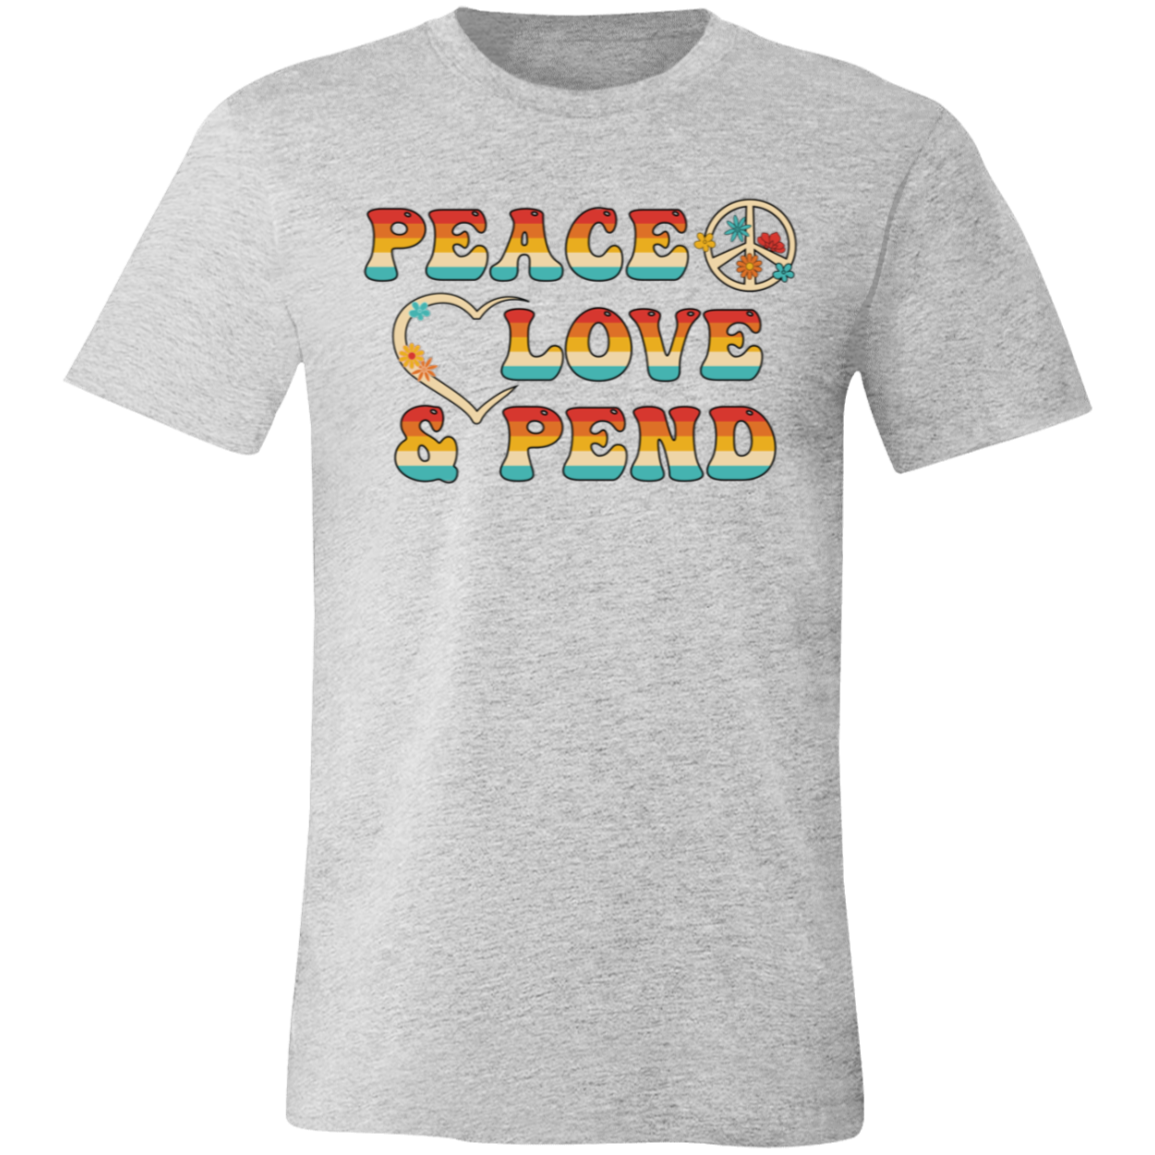 Peace, Love & Pend - Shirt